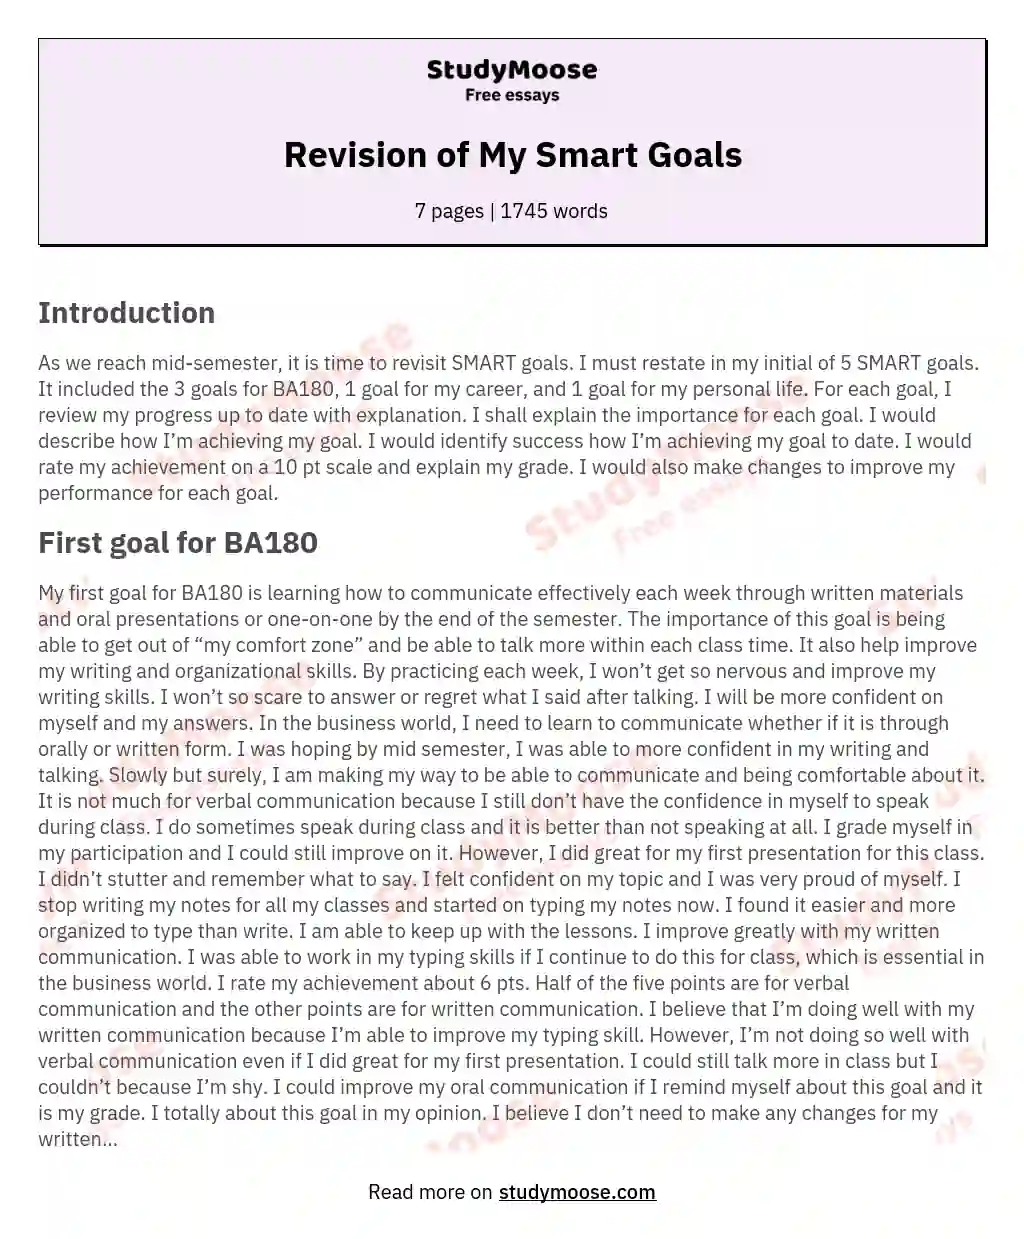 Revision of My Smart Goals essay